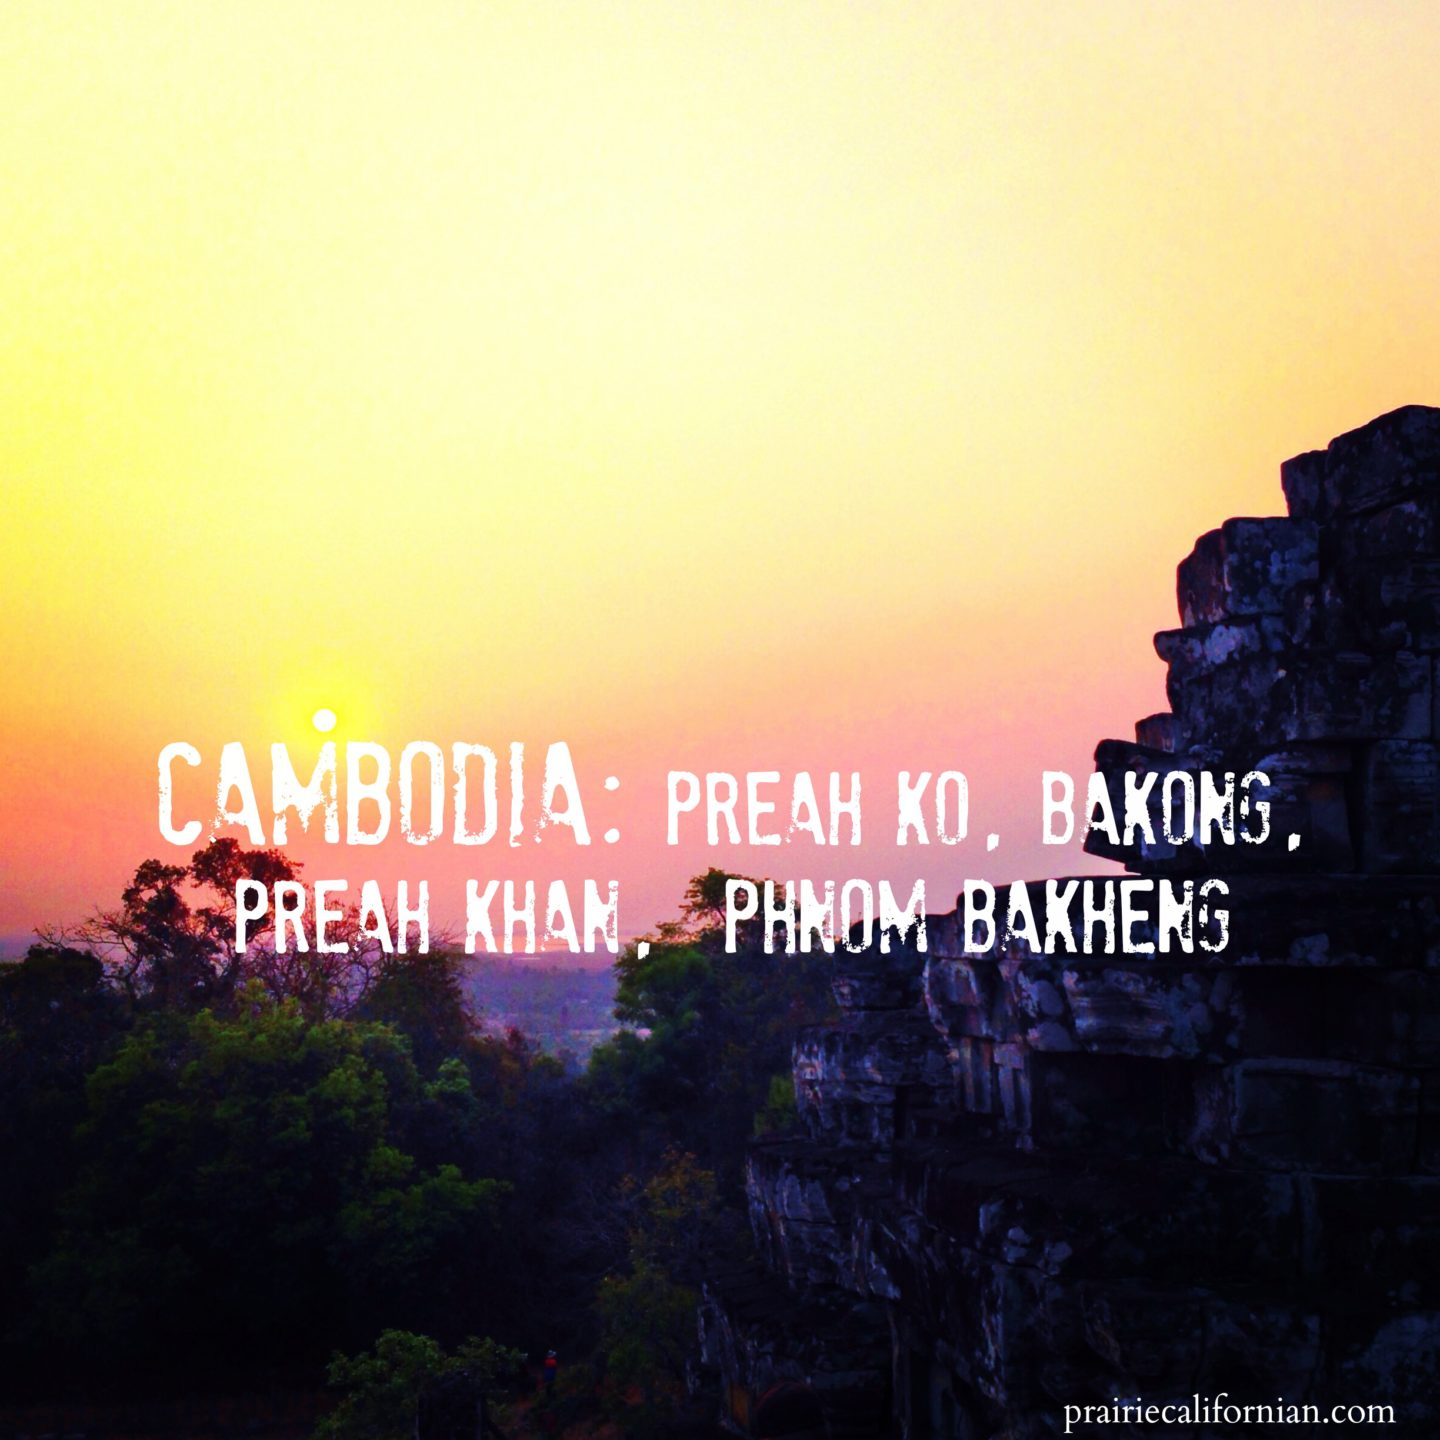 Cambodia: Preah Ko, Bakong, Preah Khan, & Phnom Bakheng